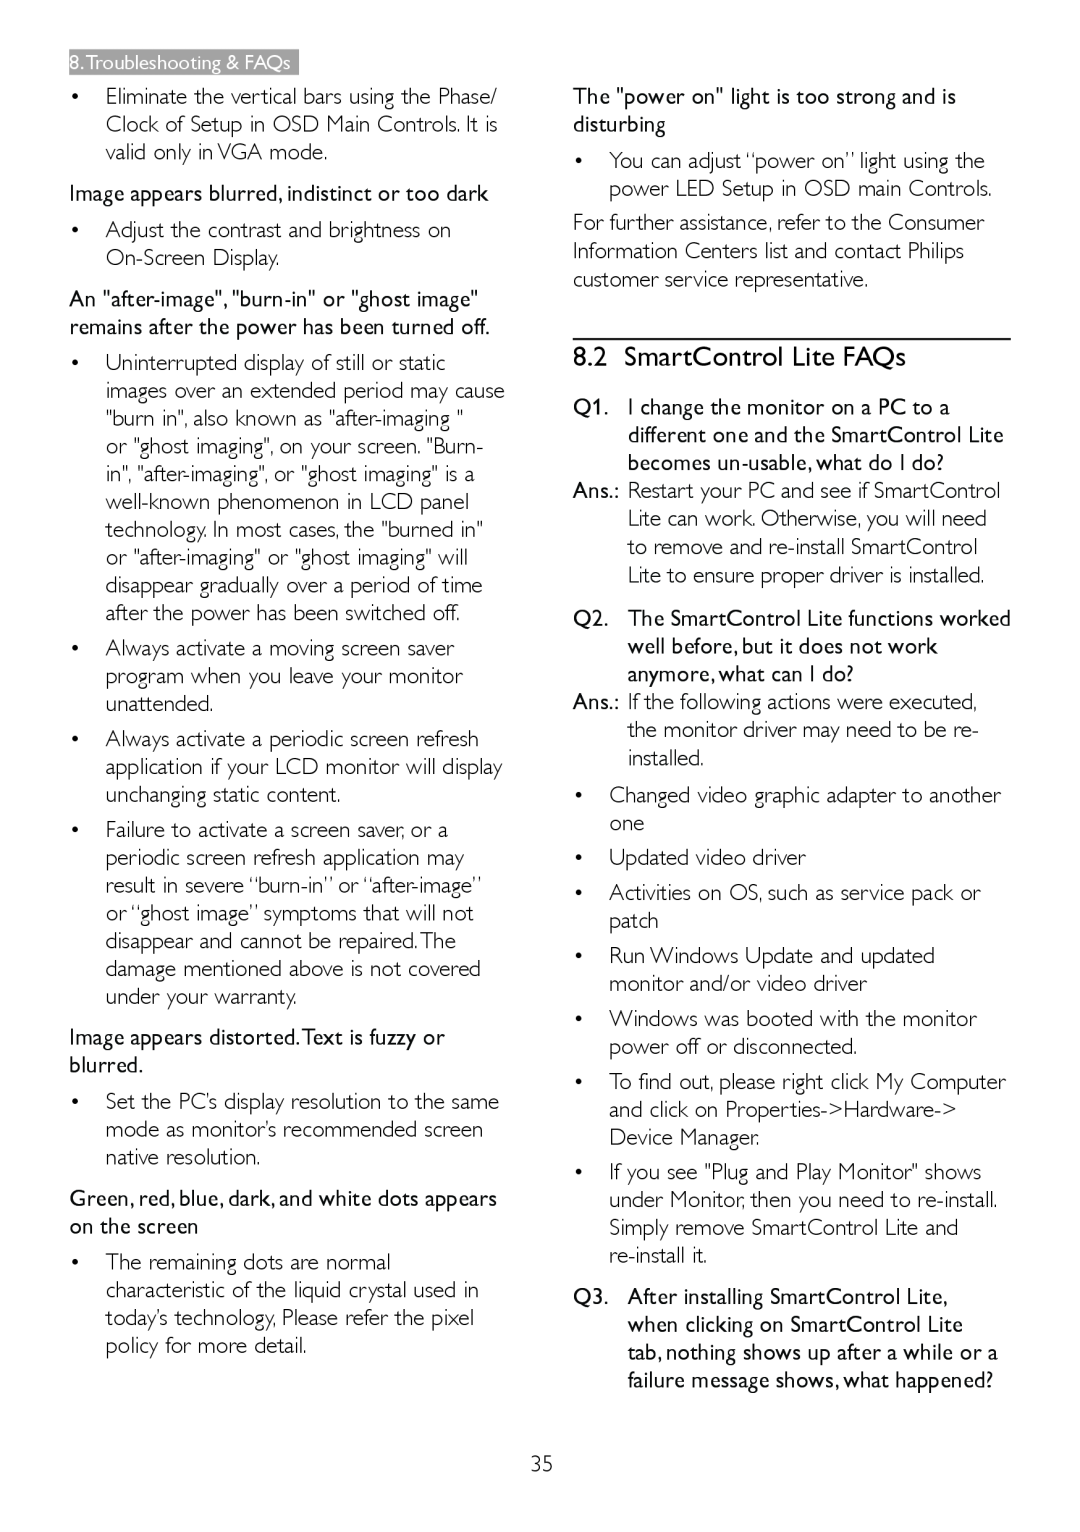 Philips 2.34E+07 user manual SmartControl Lite FAQs 